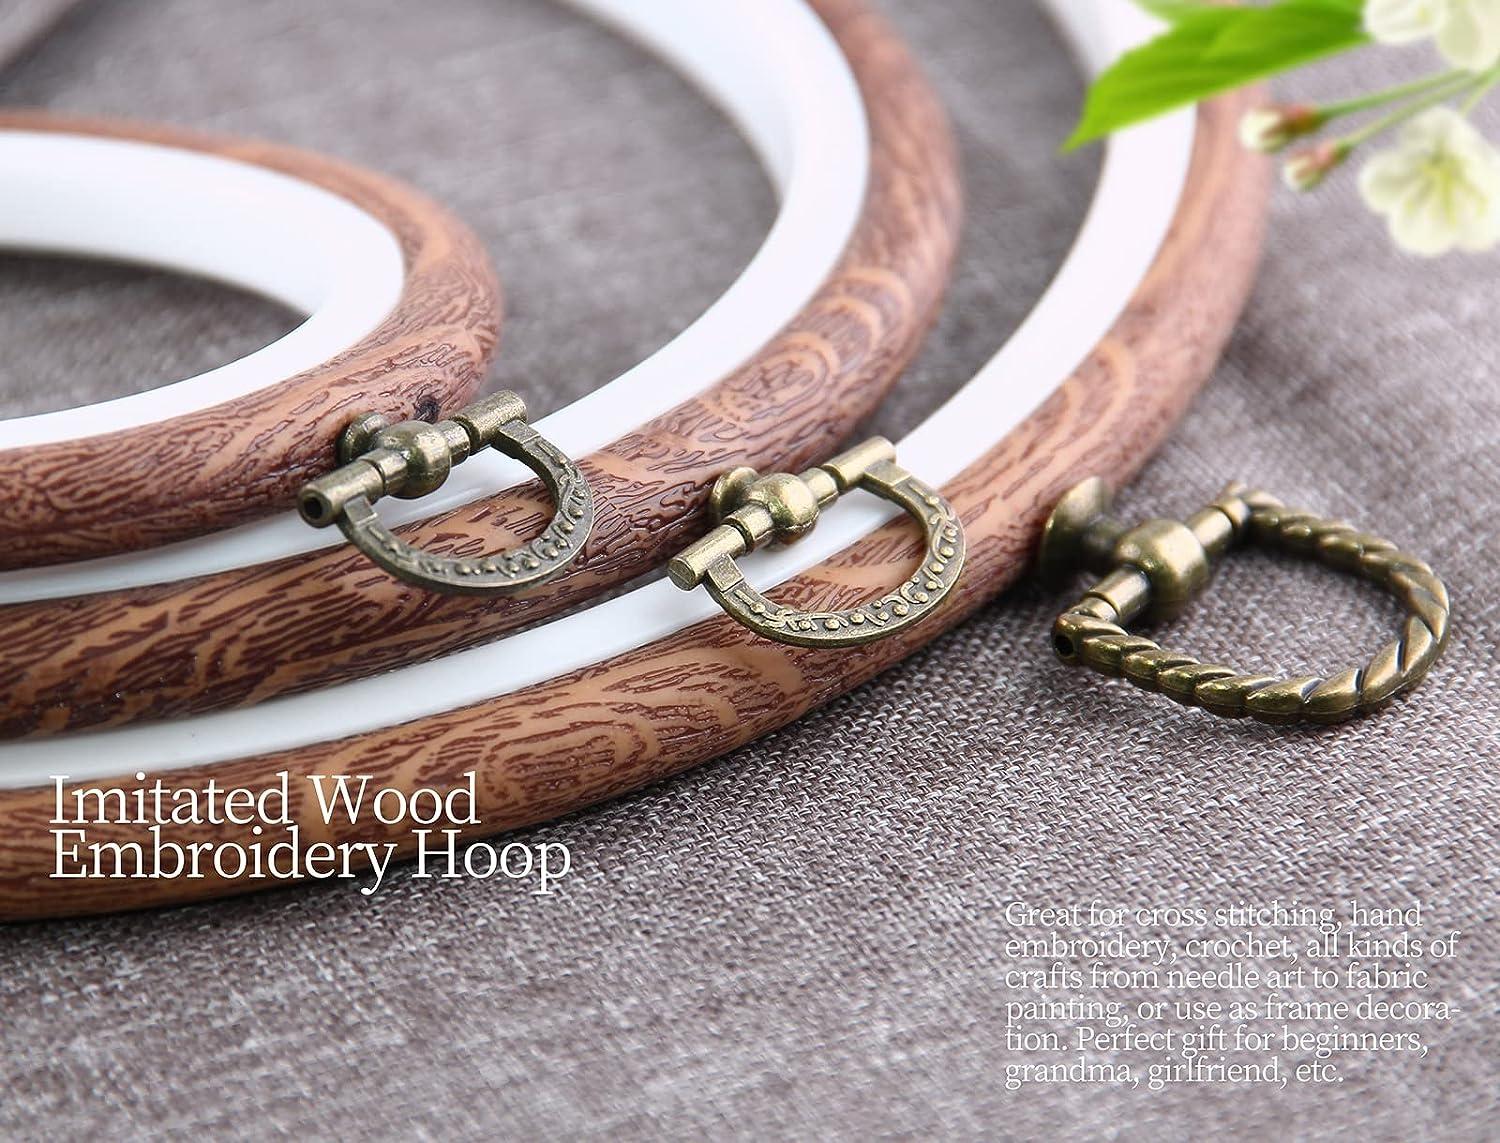 Piutouyar 3 Pieces Round Embroidery Hoop Set Imitated Wood Display